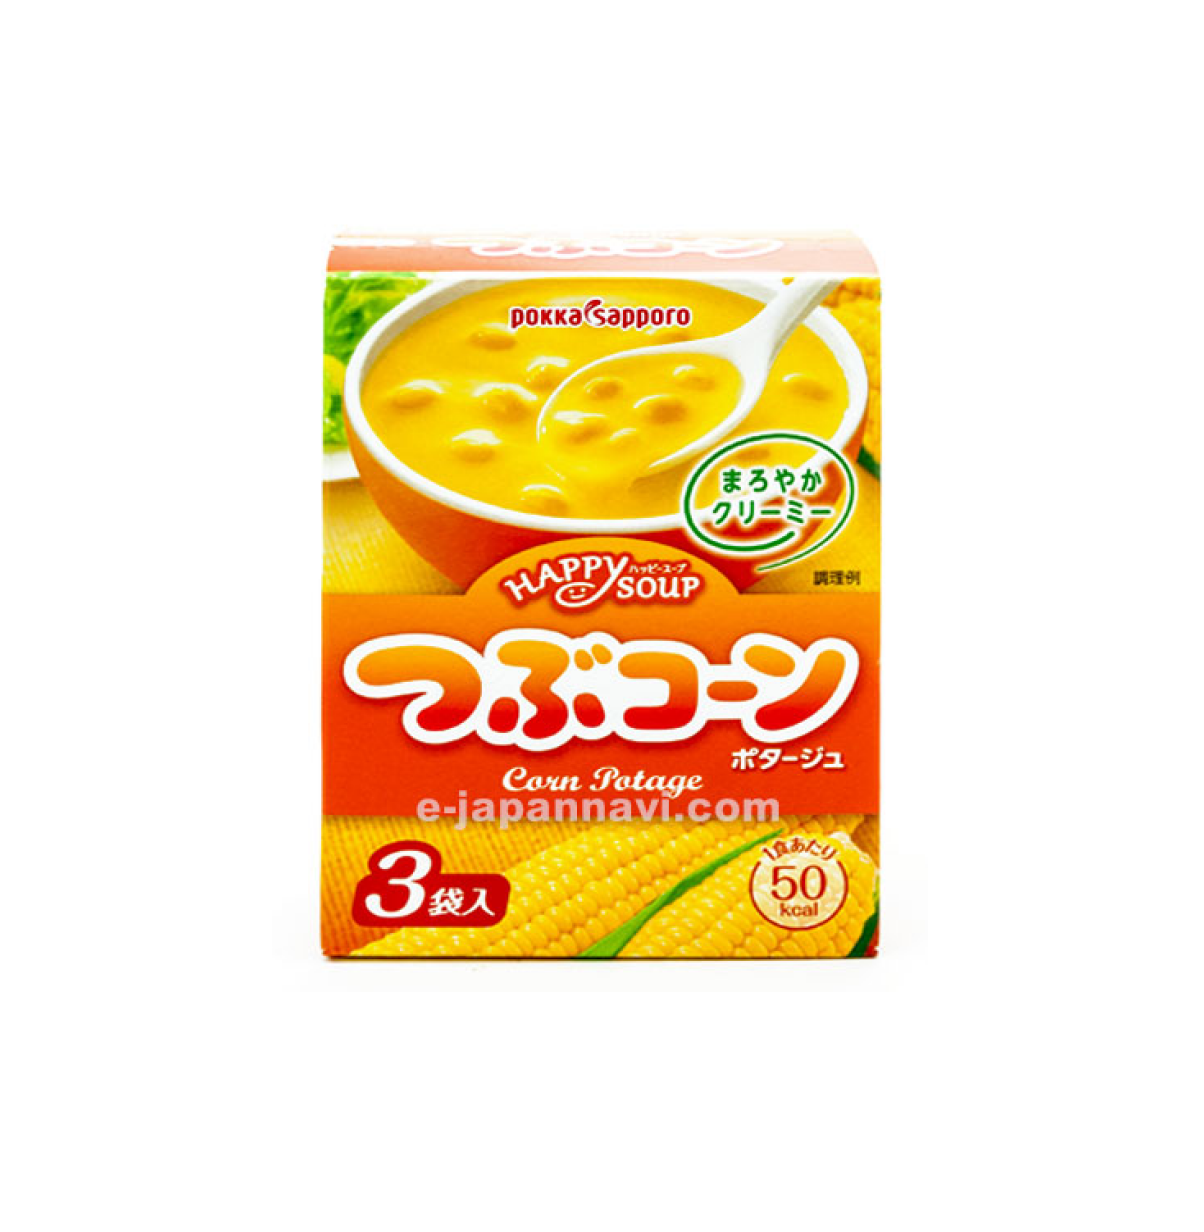 Pokka Sapporo 玉米濃湯 3袋入 兩包裝 69g